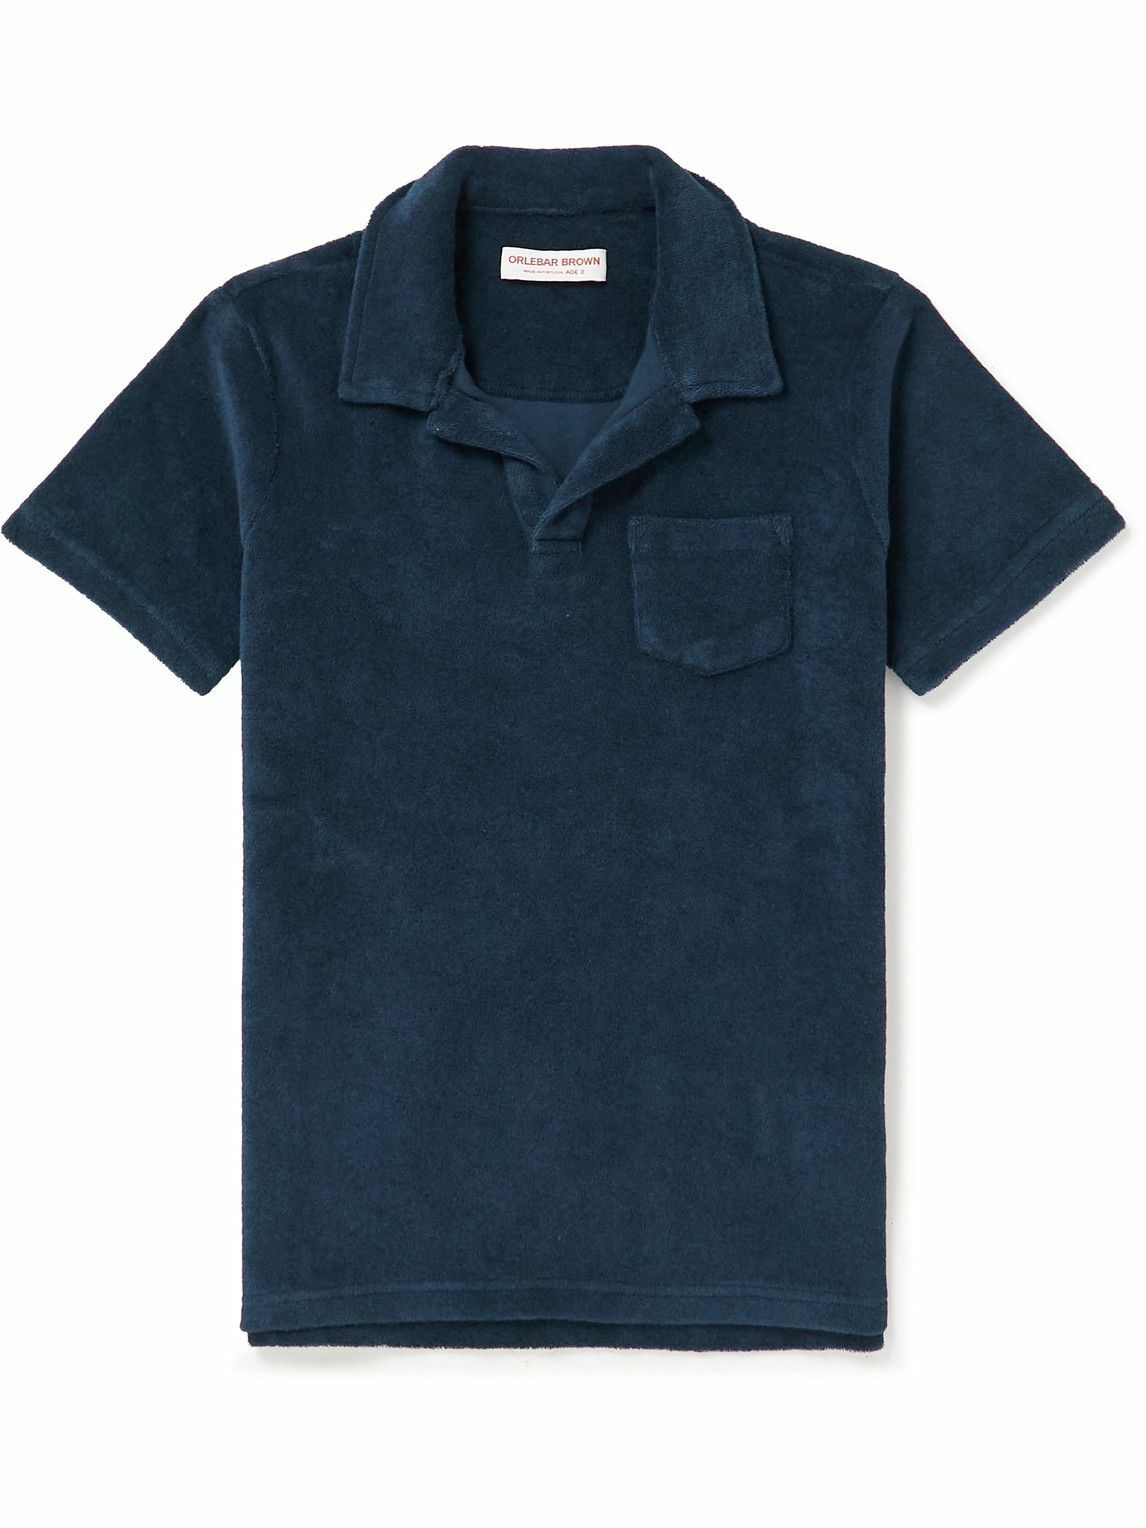 Orlebar Brown Kids - Digby Cotton-Terry Polo Shirt - Blue